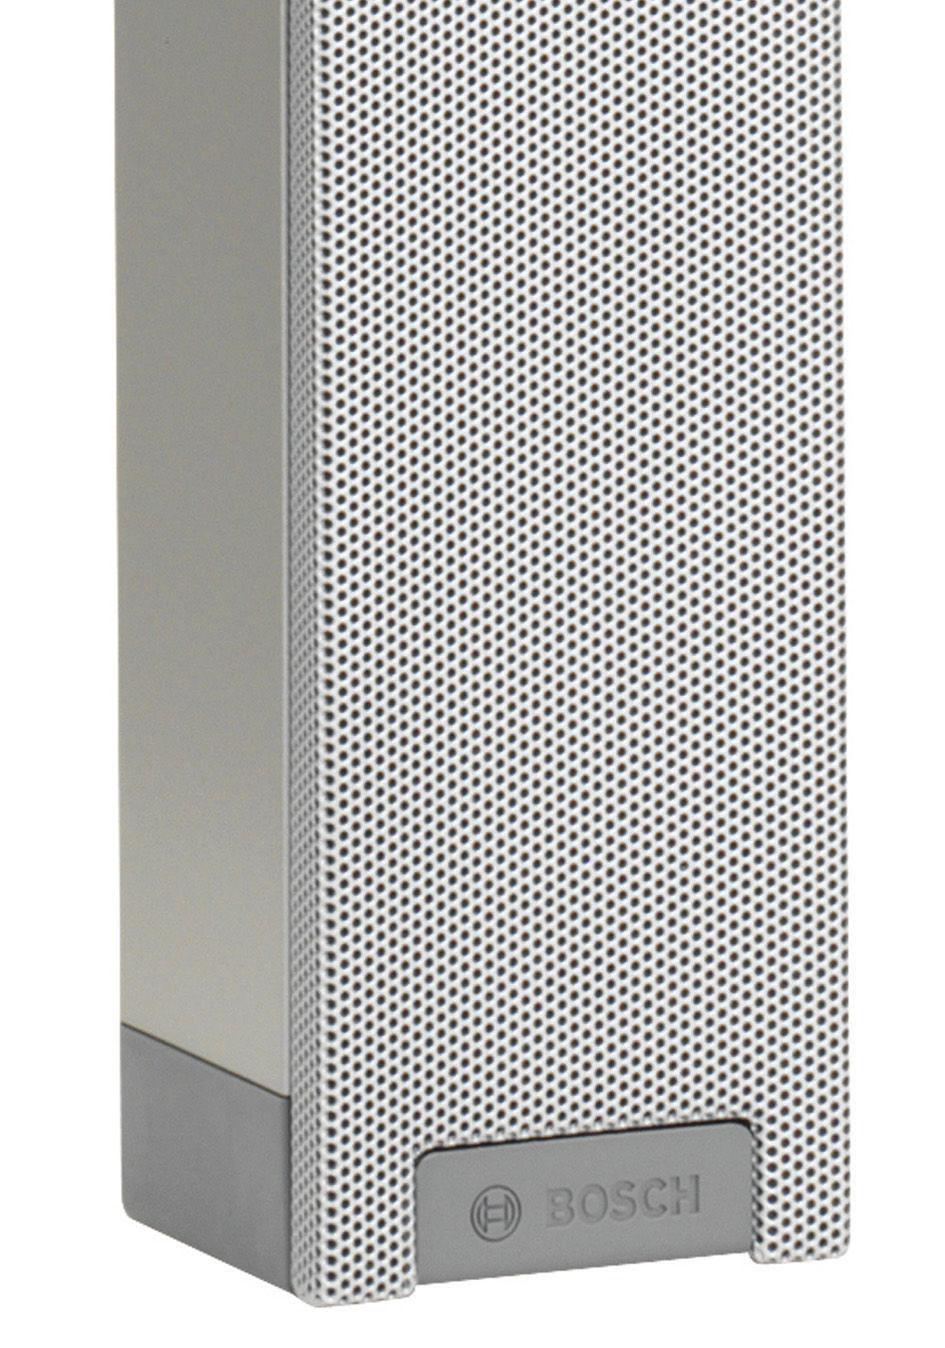 Kommunikationssysteme LBC 3201/00 Line-Array-Lautsprecher für den Innenbereich LBC 3201/00 Line-Array-Lautsprecher für den Innenbereich www.boschsecurity.